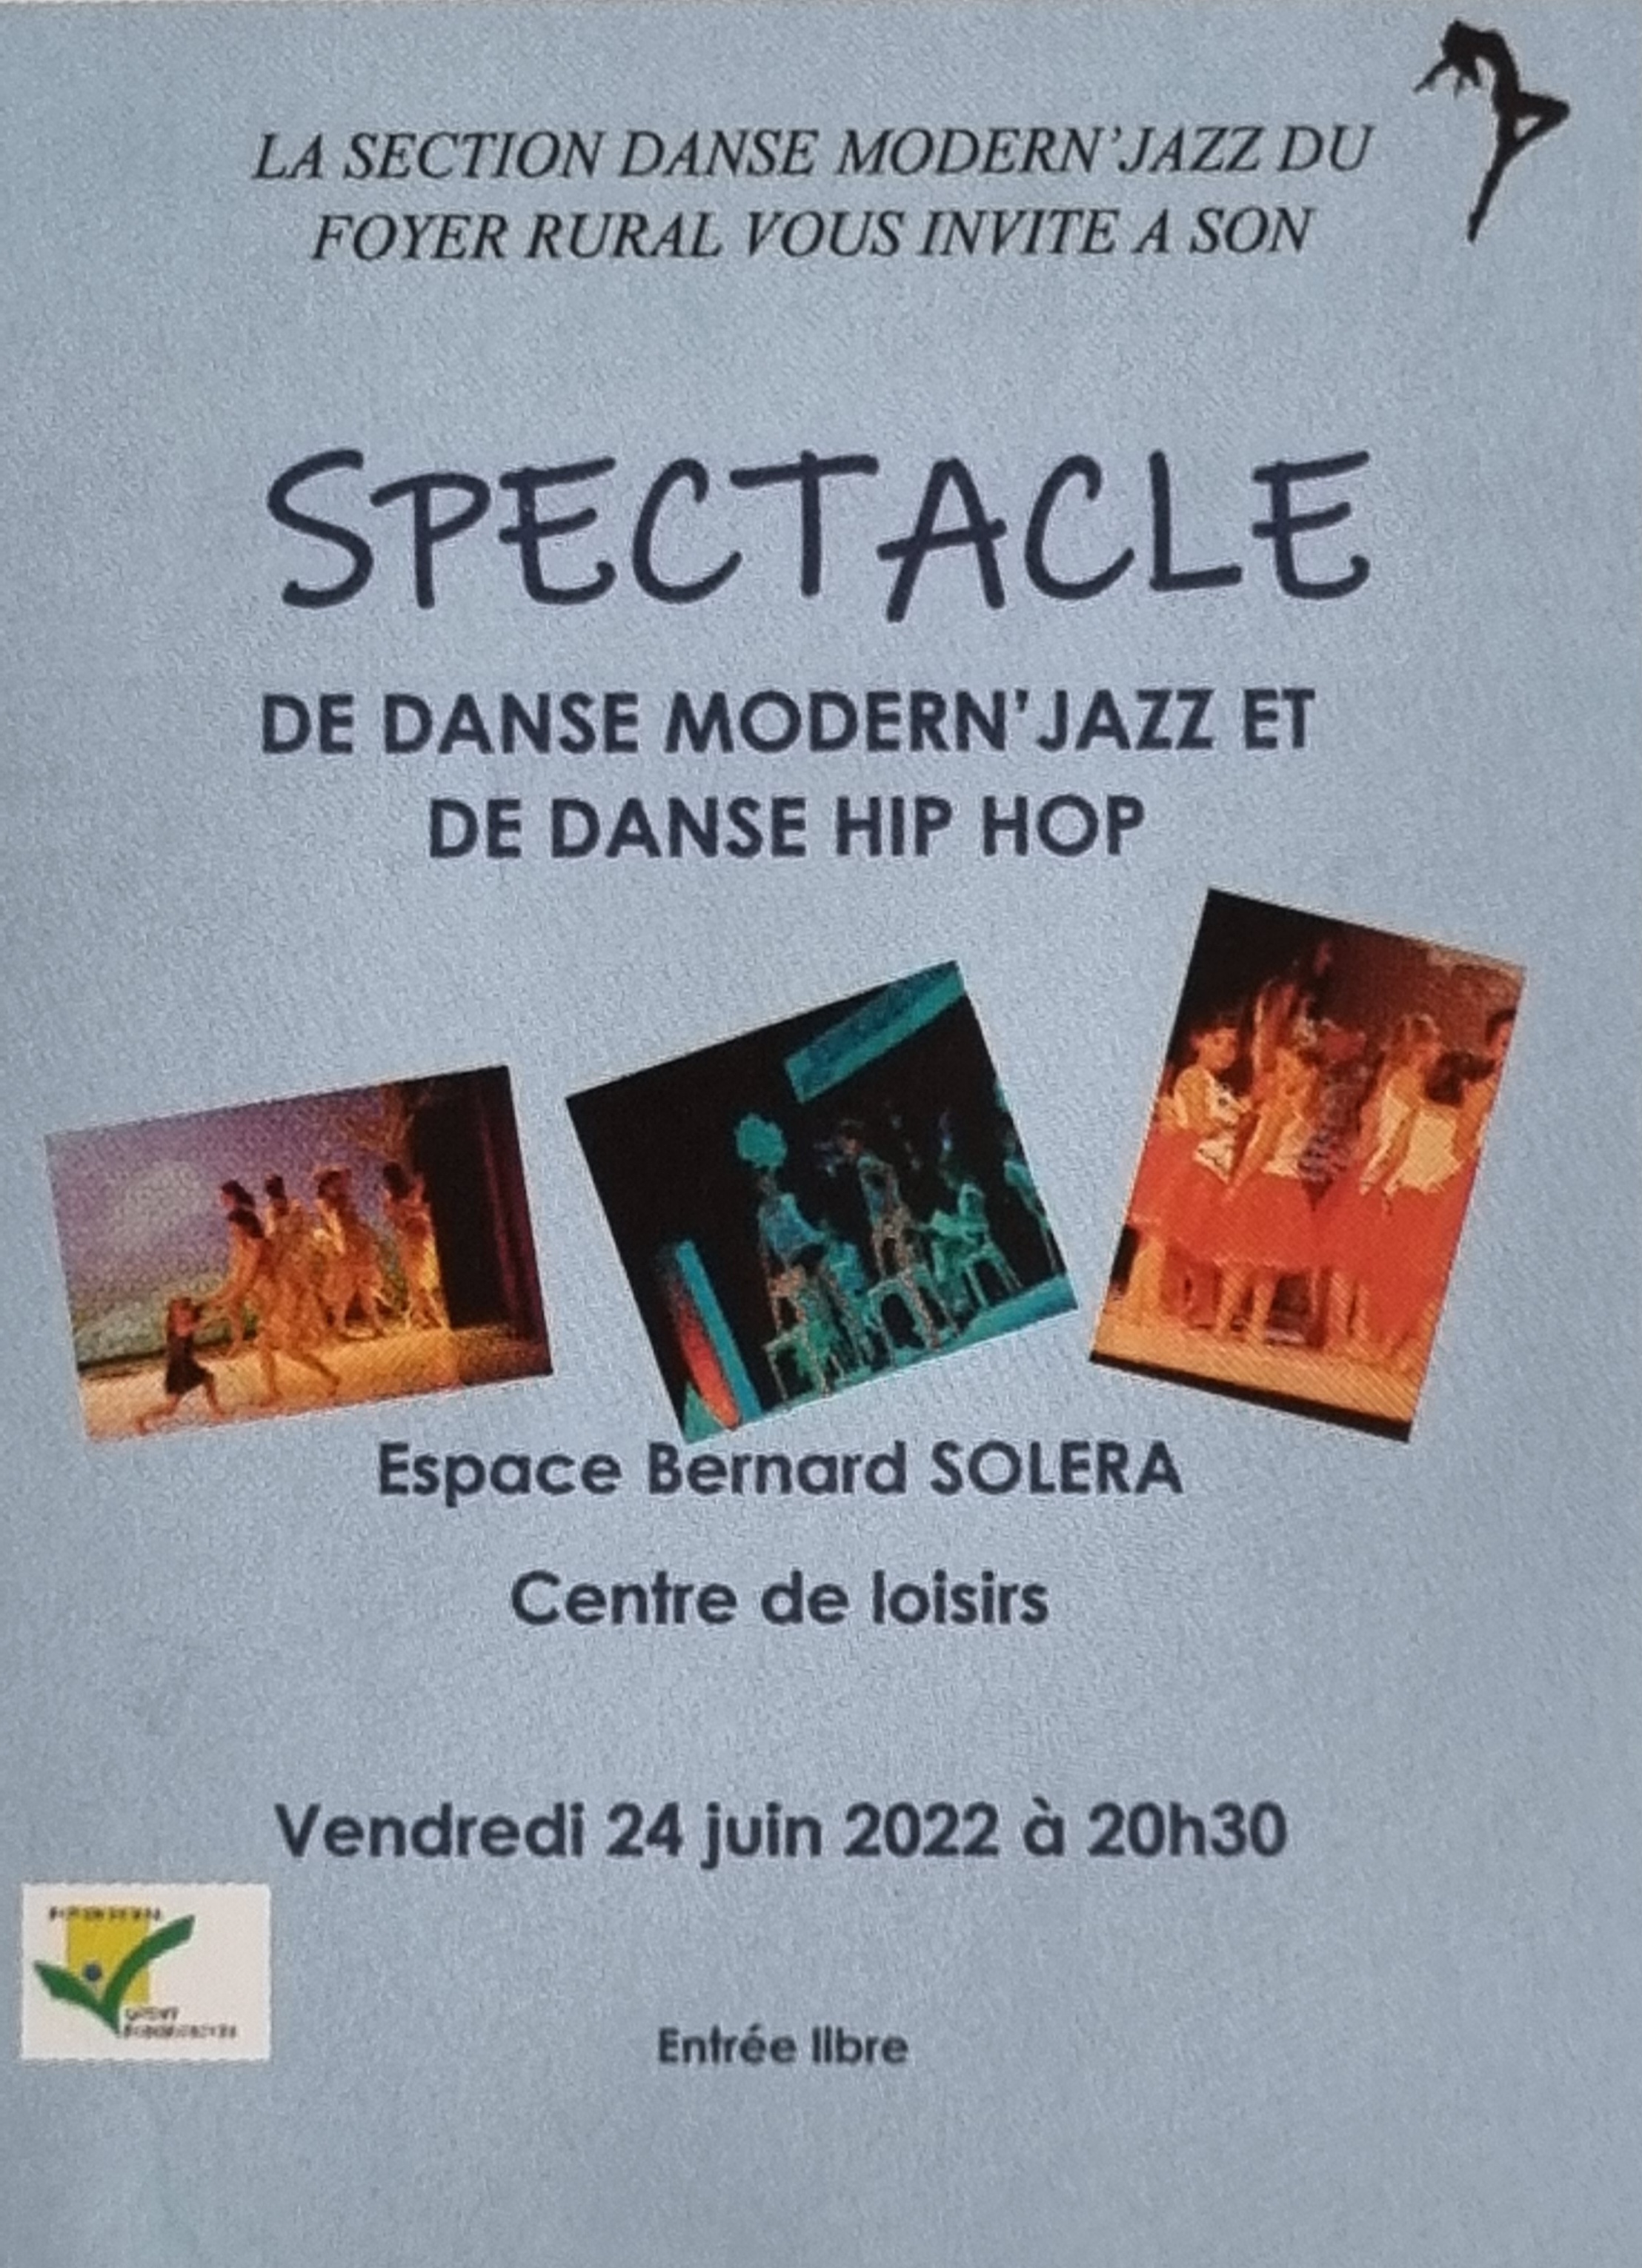 Gala Danse Modern Jazz et Danse Hip Hop